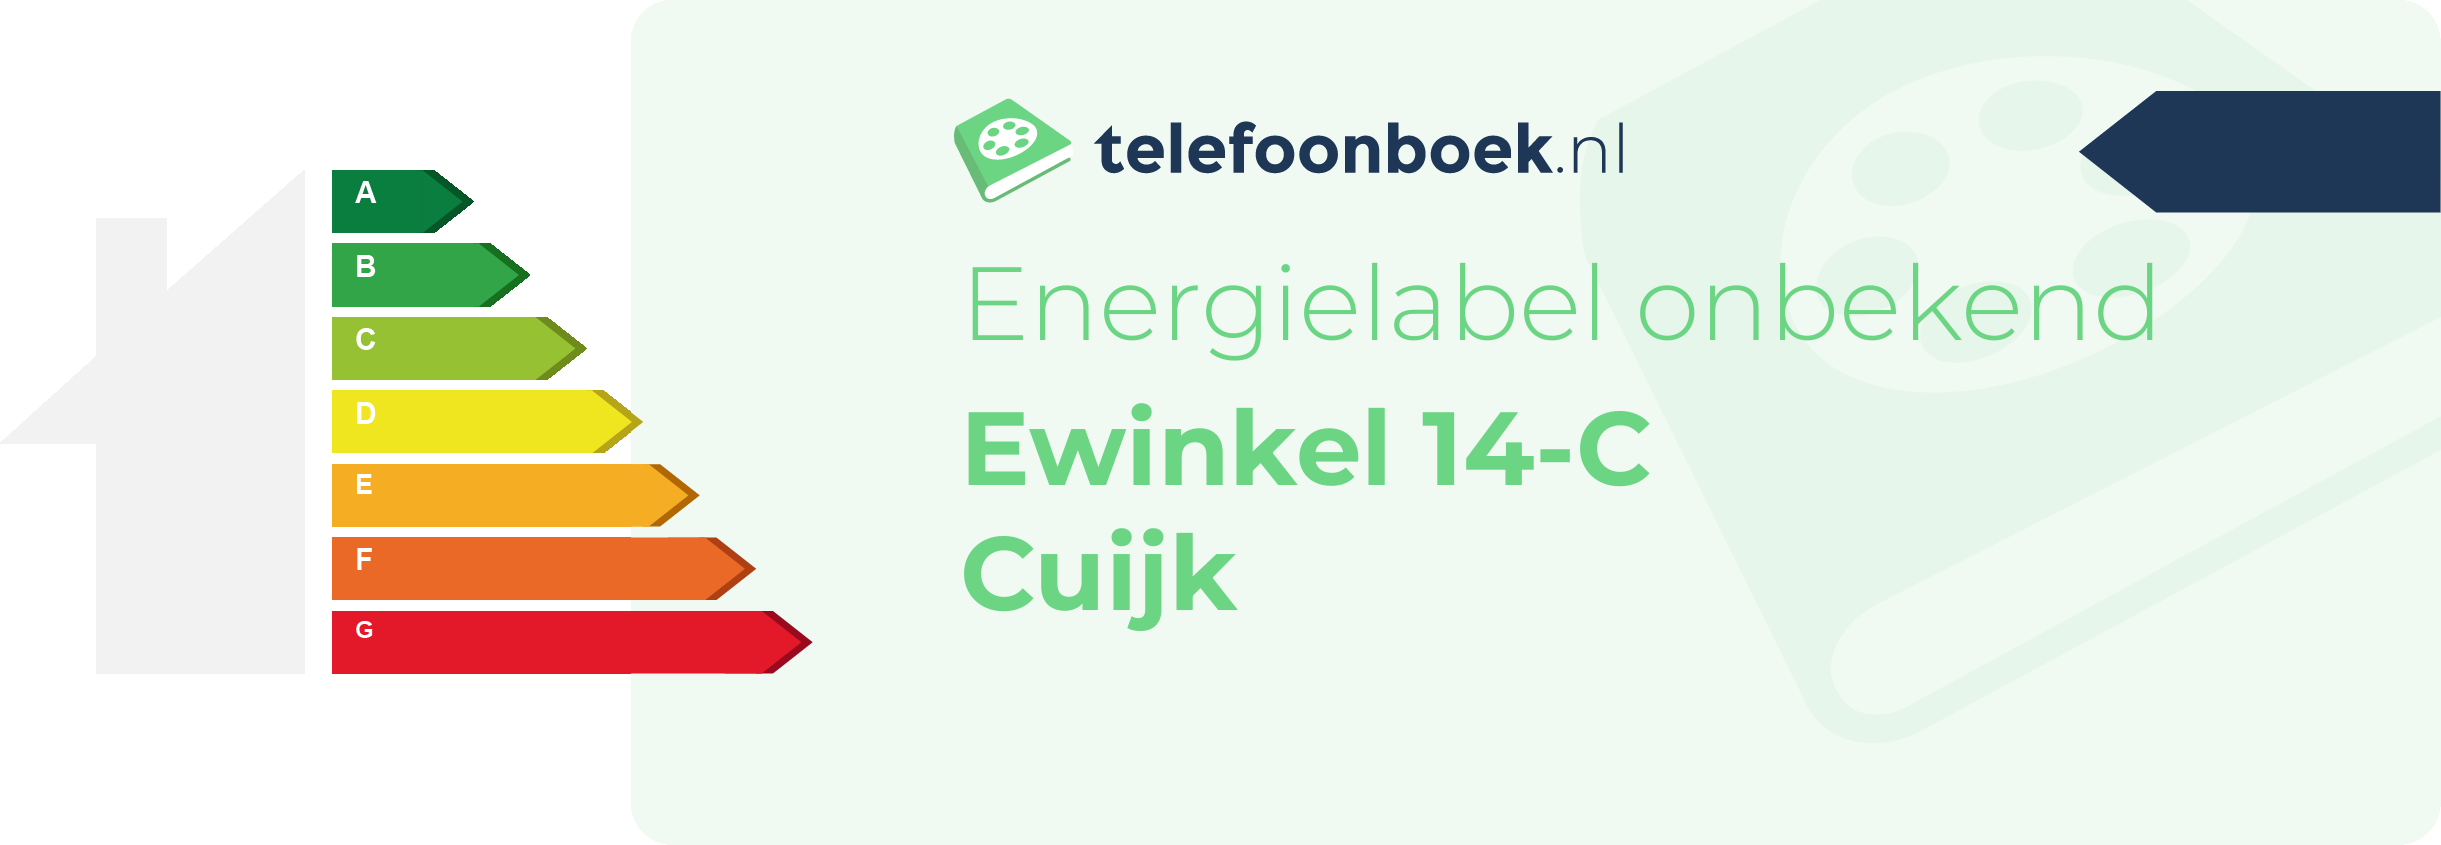 Energielabel Ewinkel 14-C Cuijk